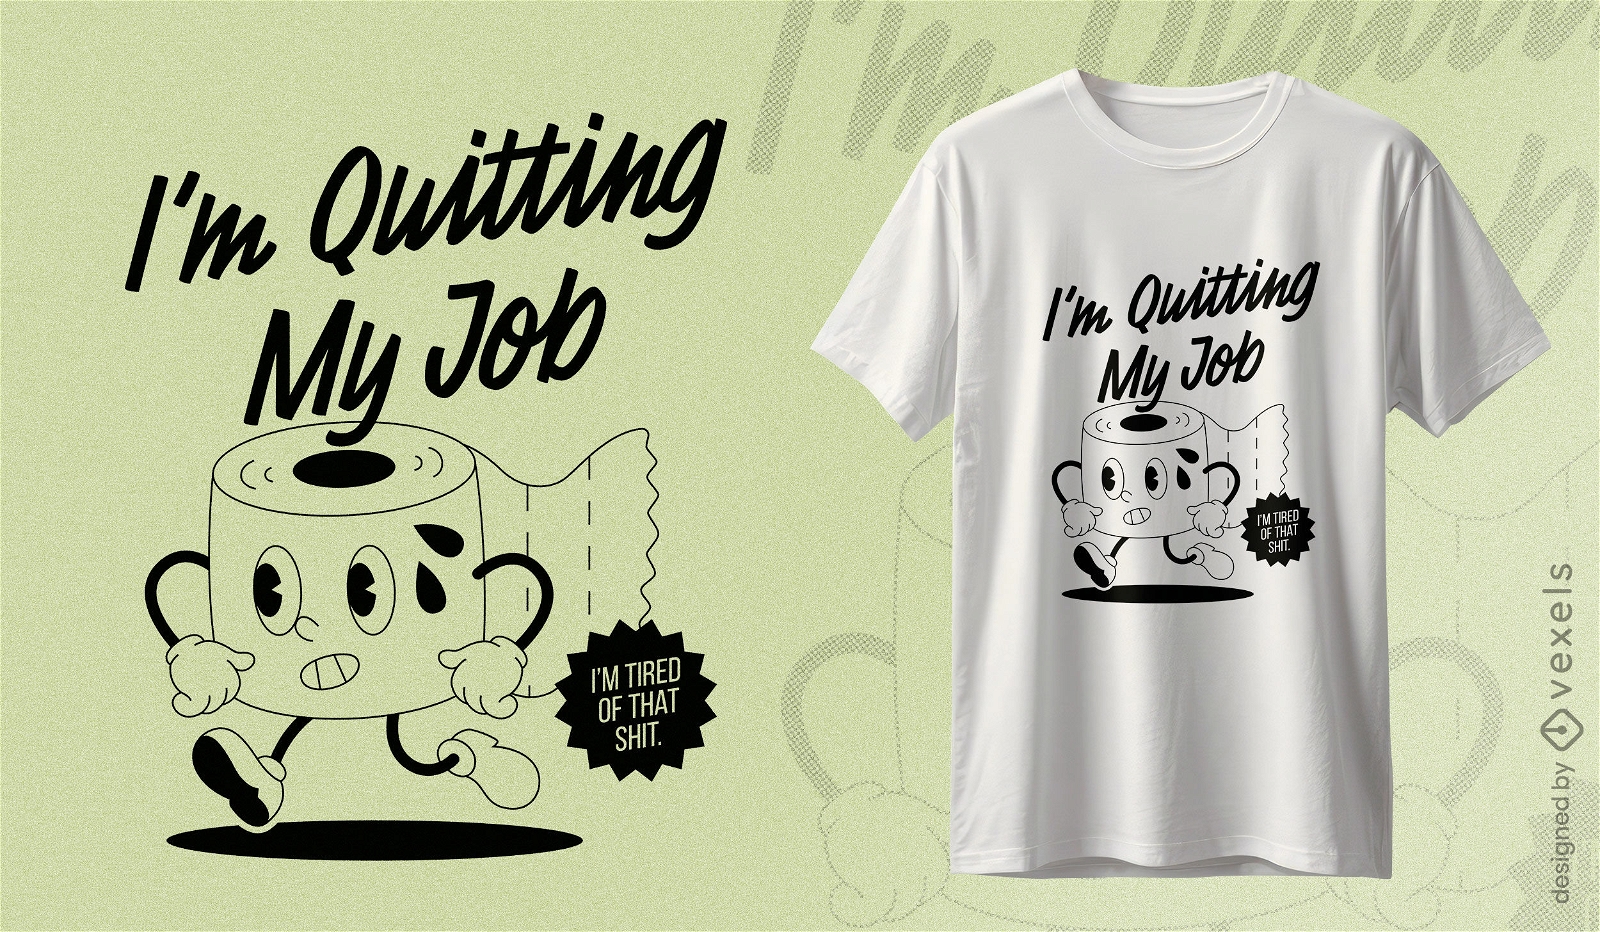 Quitting job coffee t-shirt design